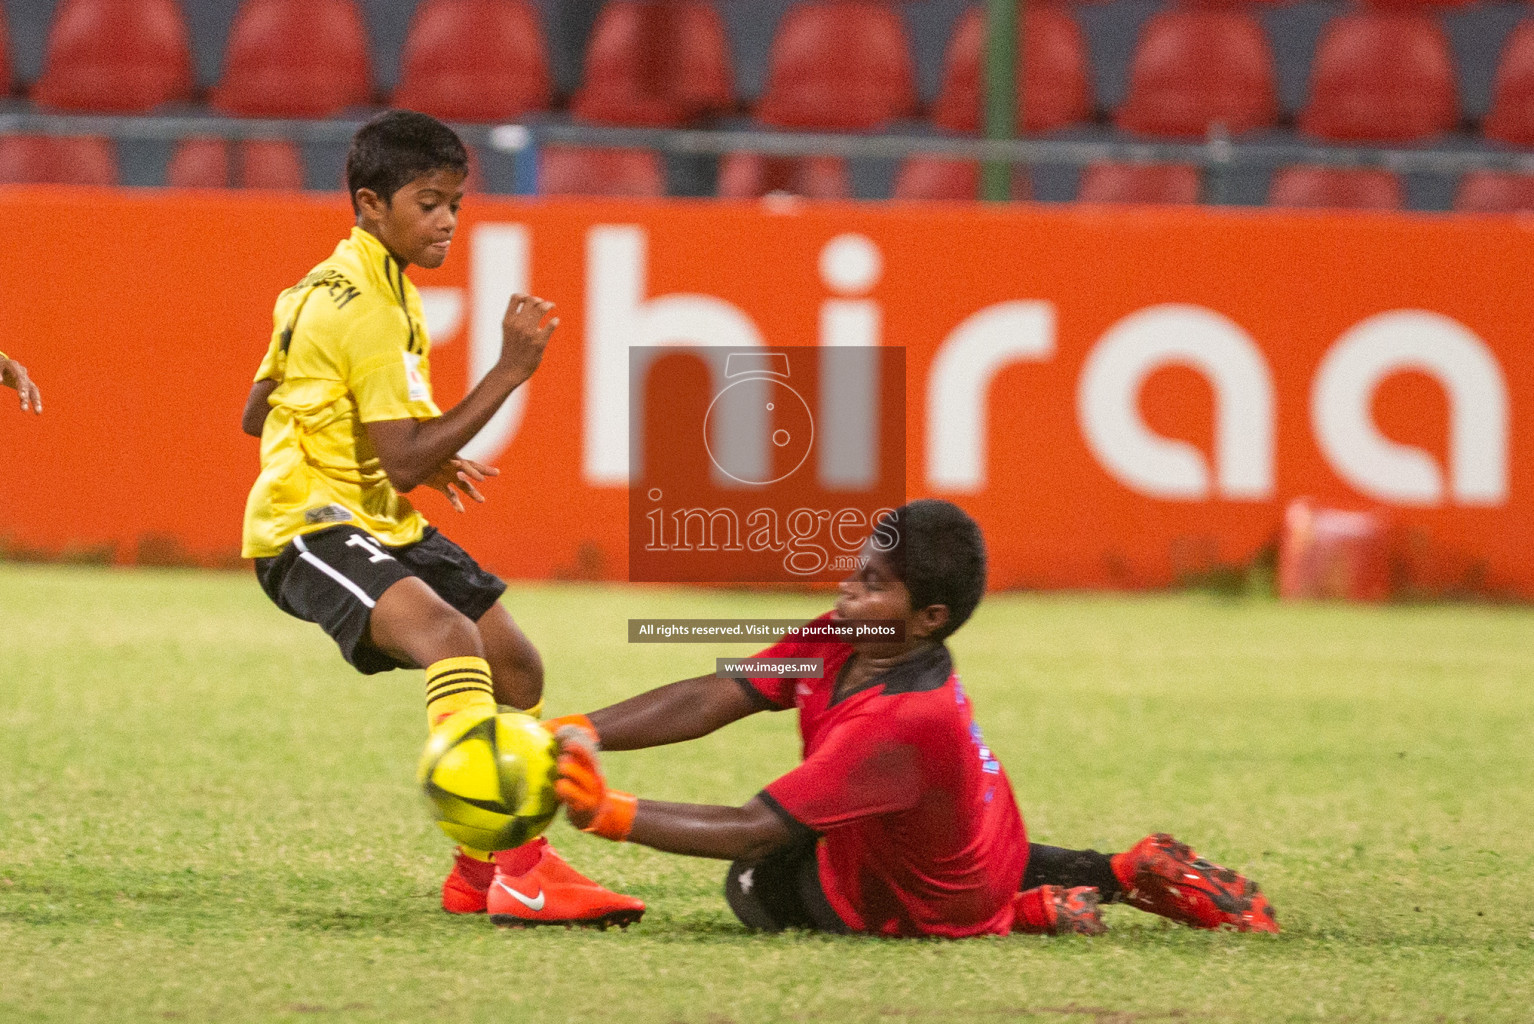 Ghaazee School vs Thaajuddin School in MAMEN Inter School Football Tournament 2019 (U13) in Male, Maldives on 16th April 2019